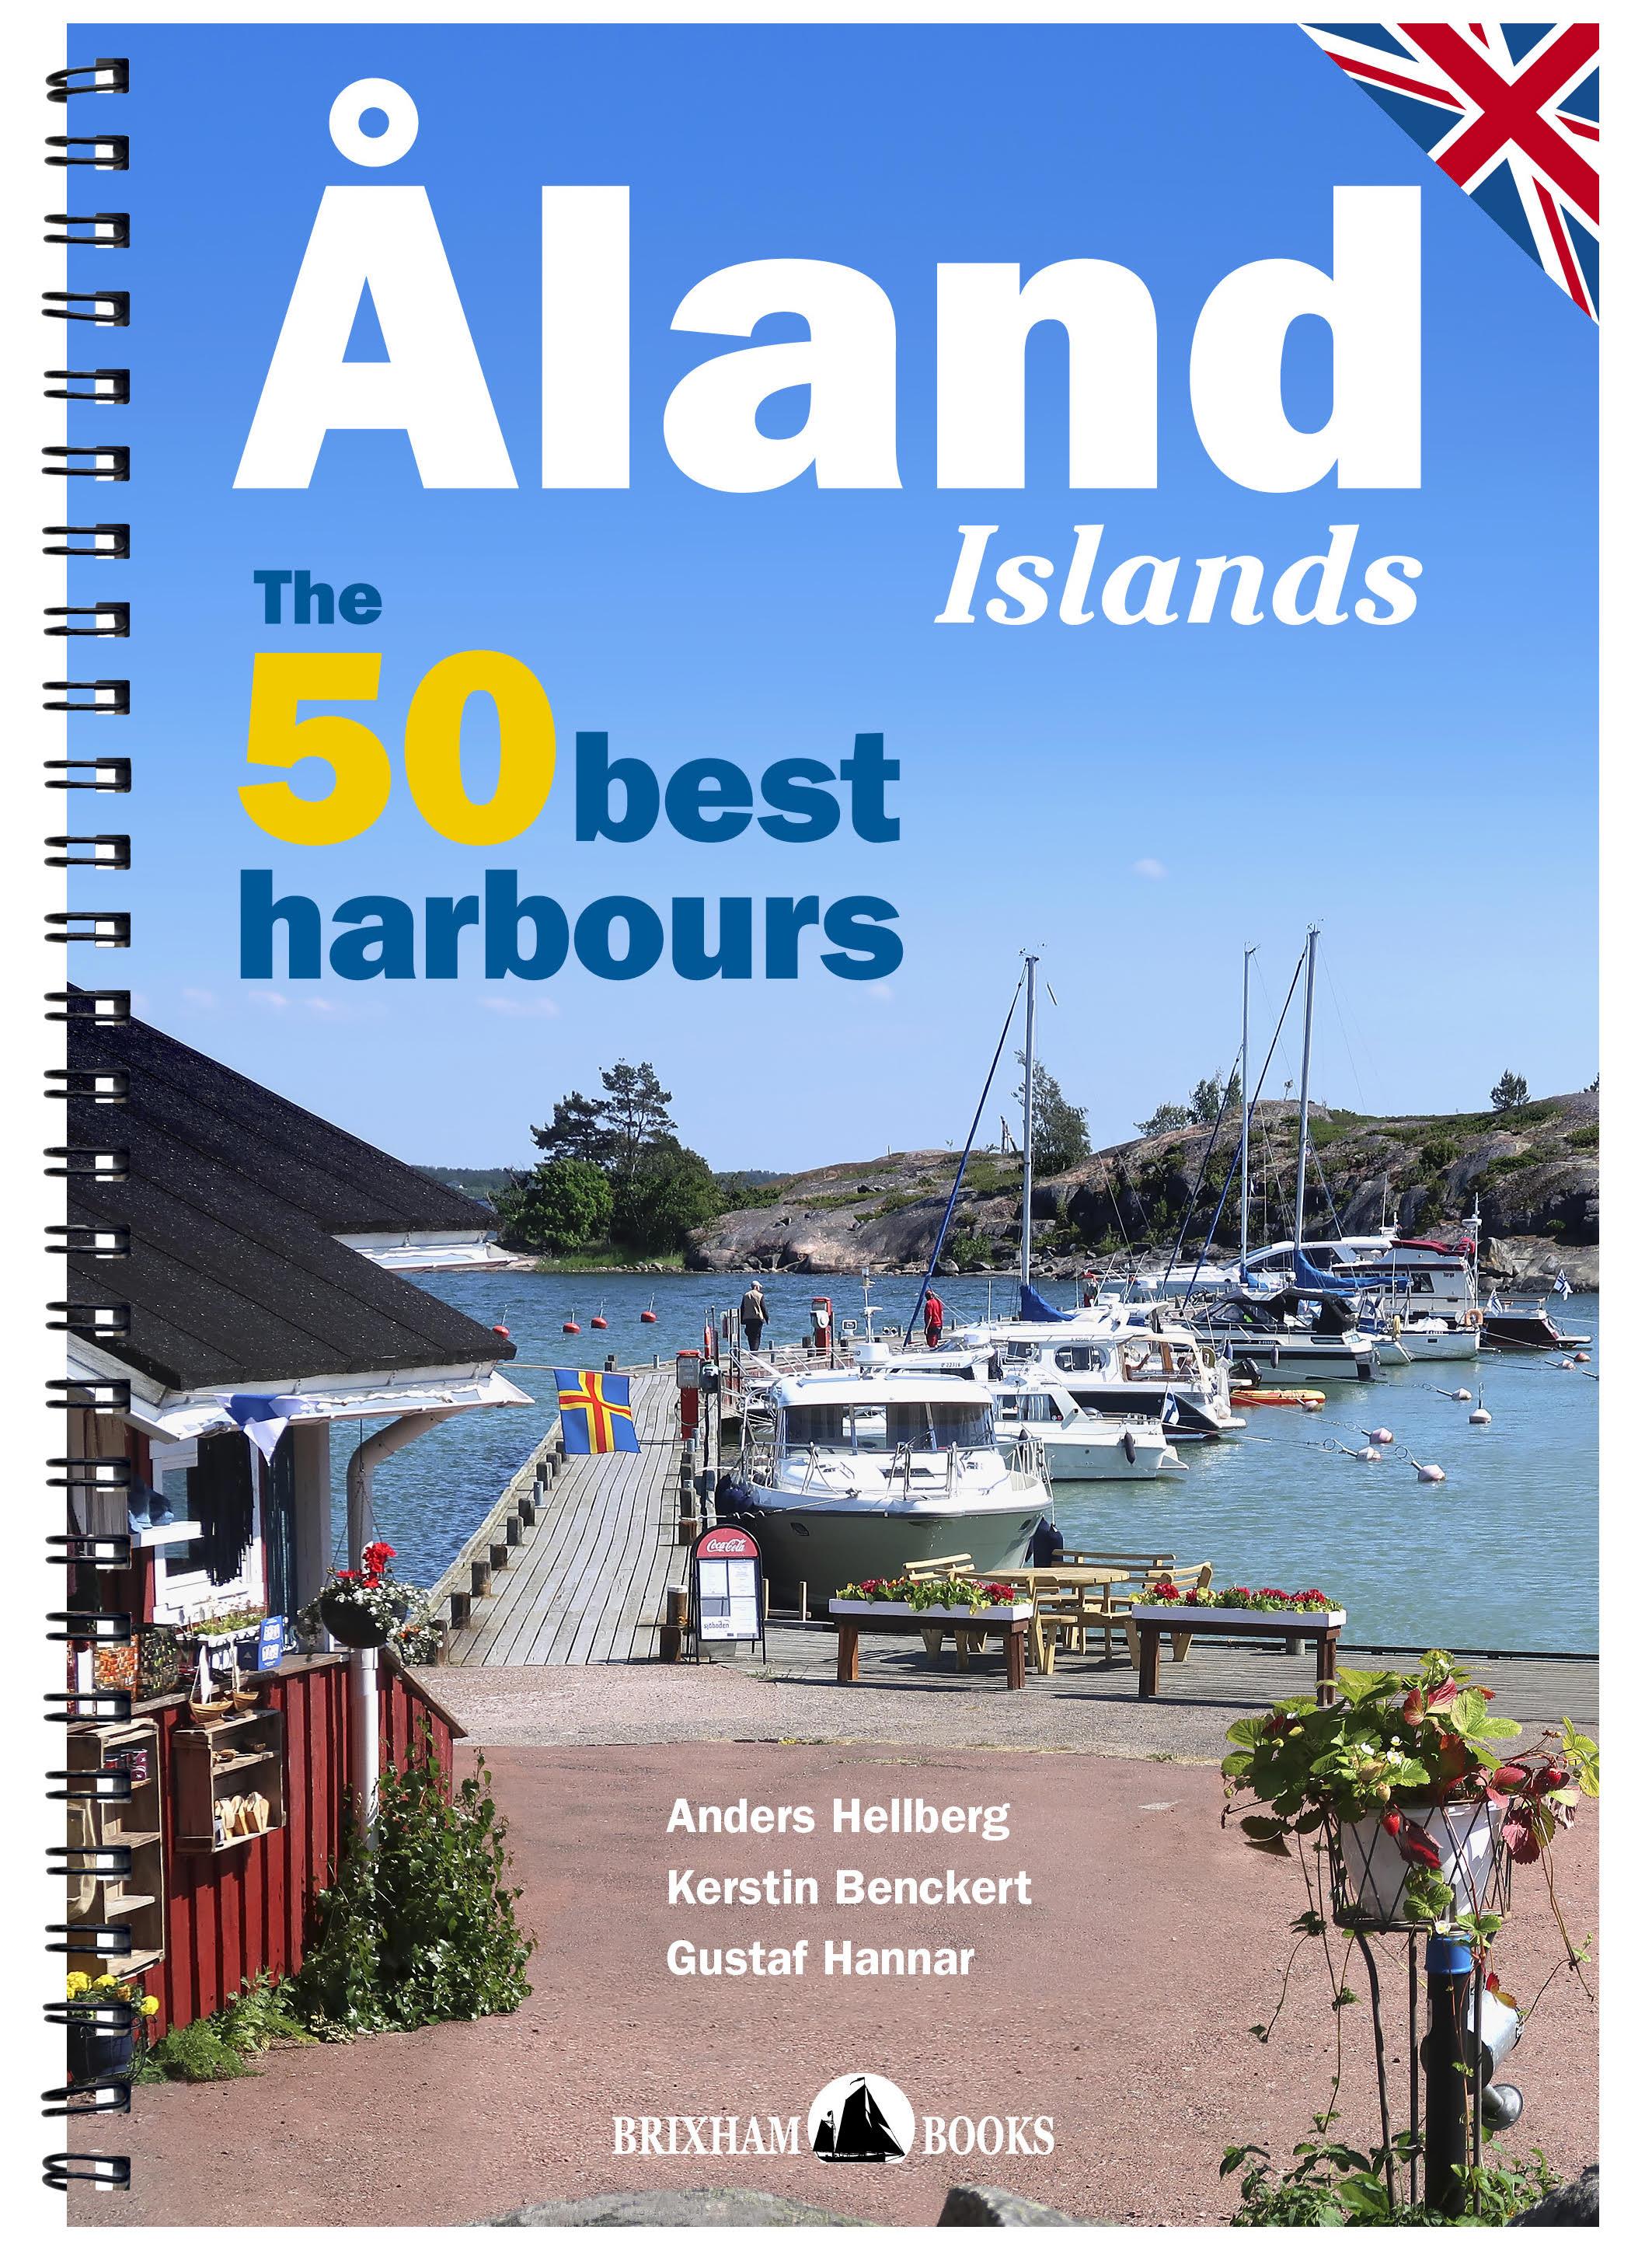 Åland Islands - The 50 Best Harbours